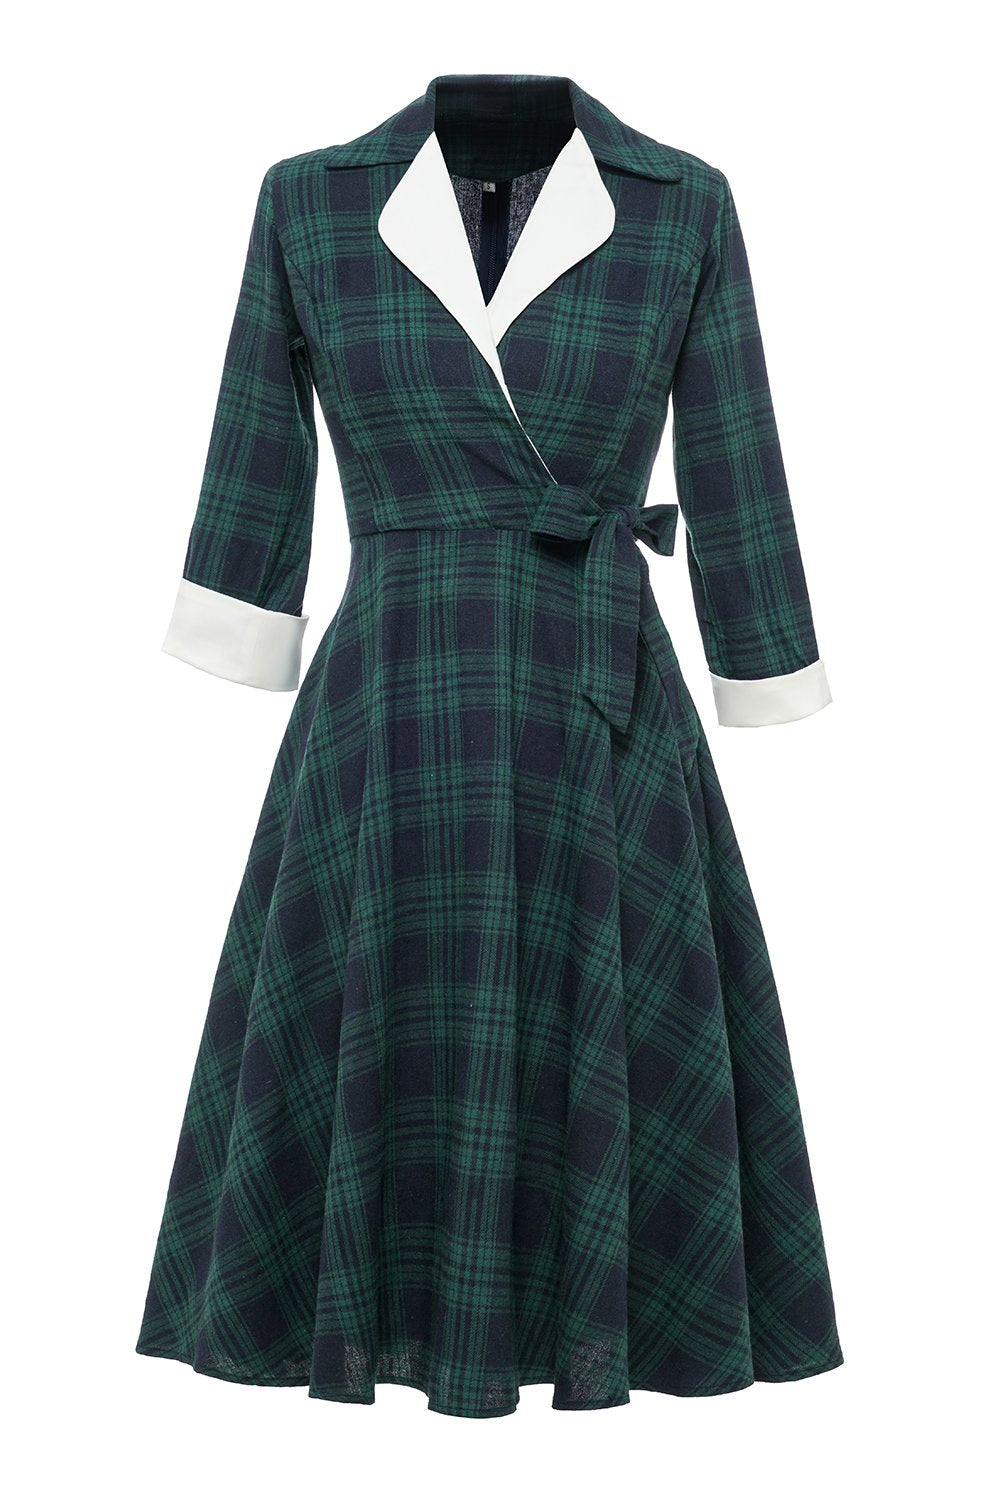 Green Plaid Vintage 1950s Dress